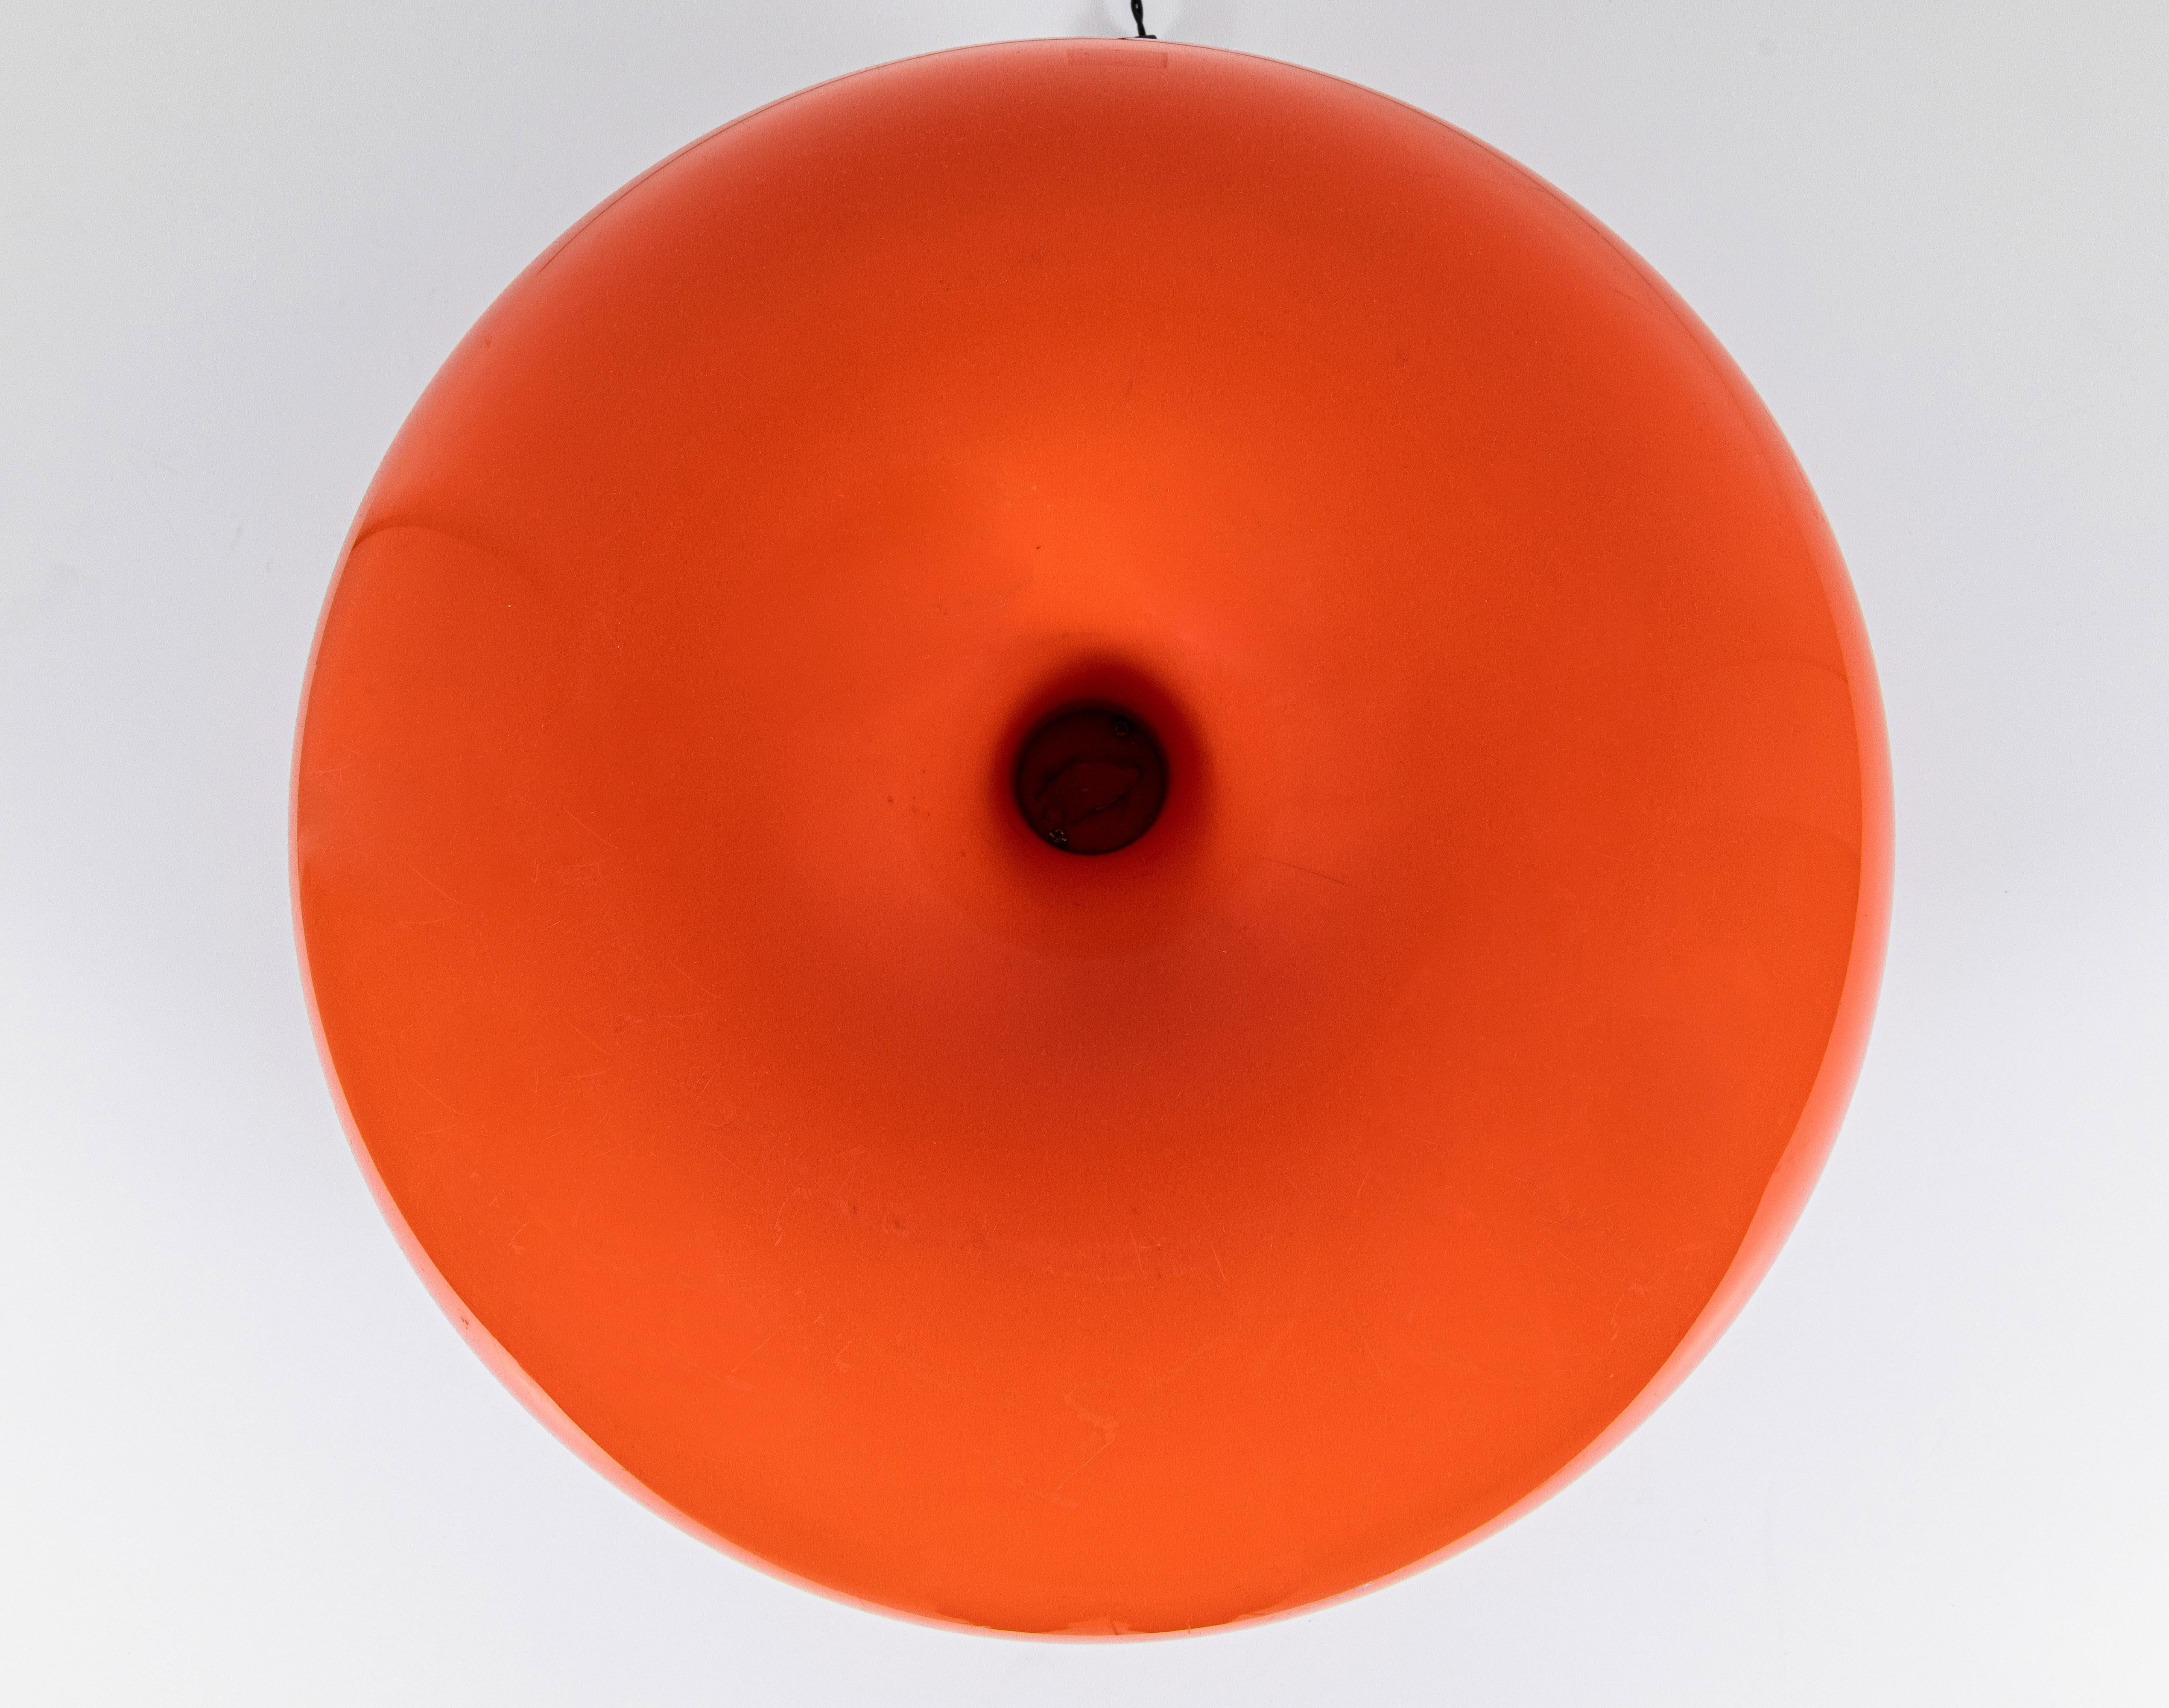 Italian Nesso Table Lamp in Orange Color by Giancarlo Mattioli for Artemide, Italy 1960s